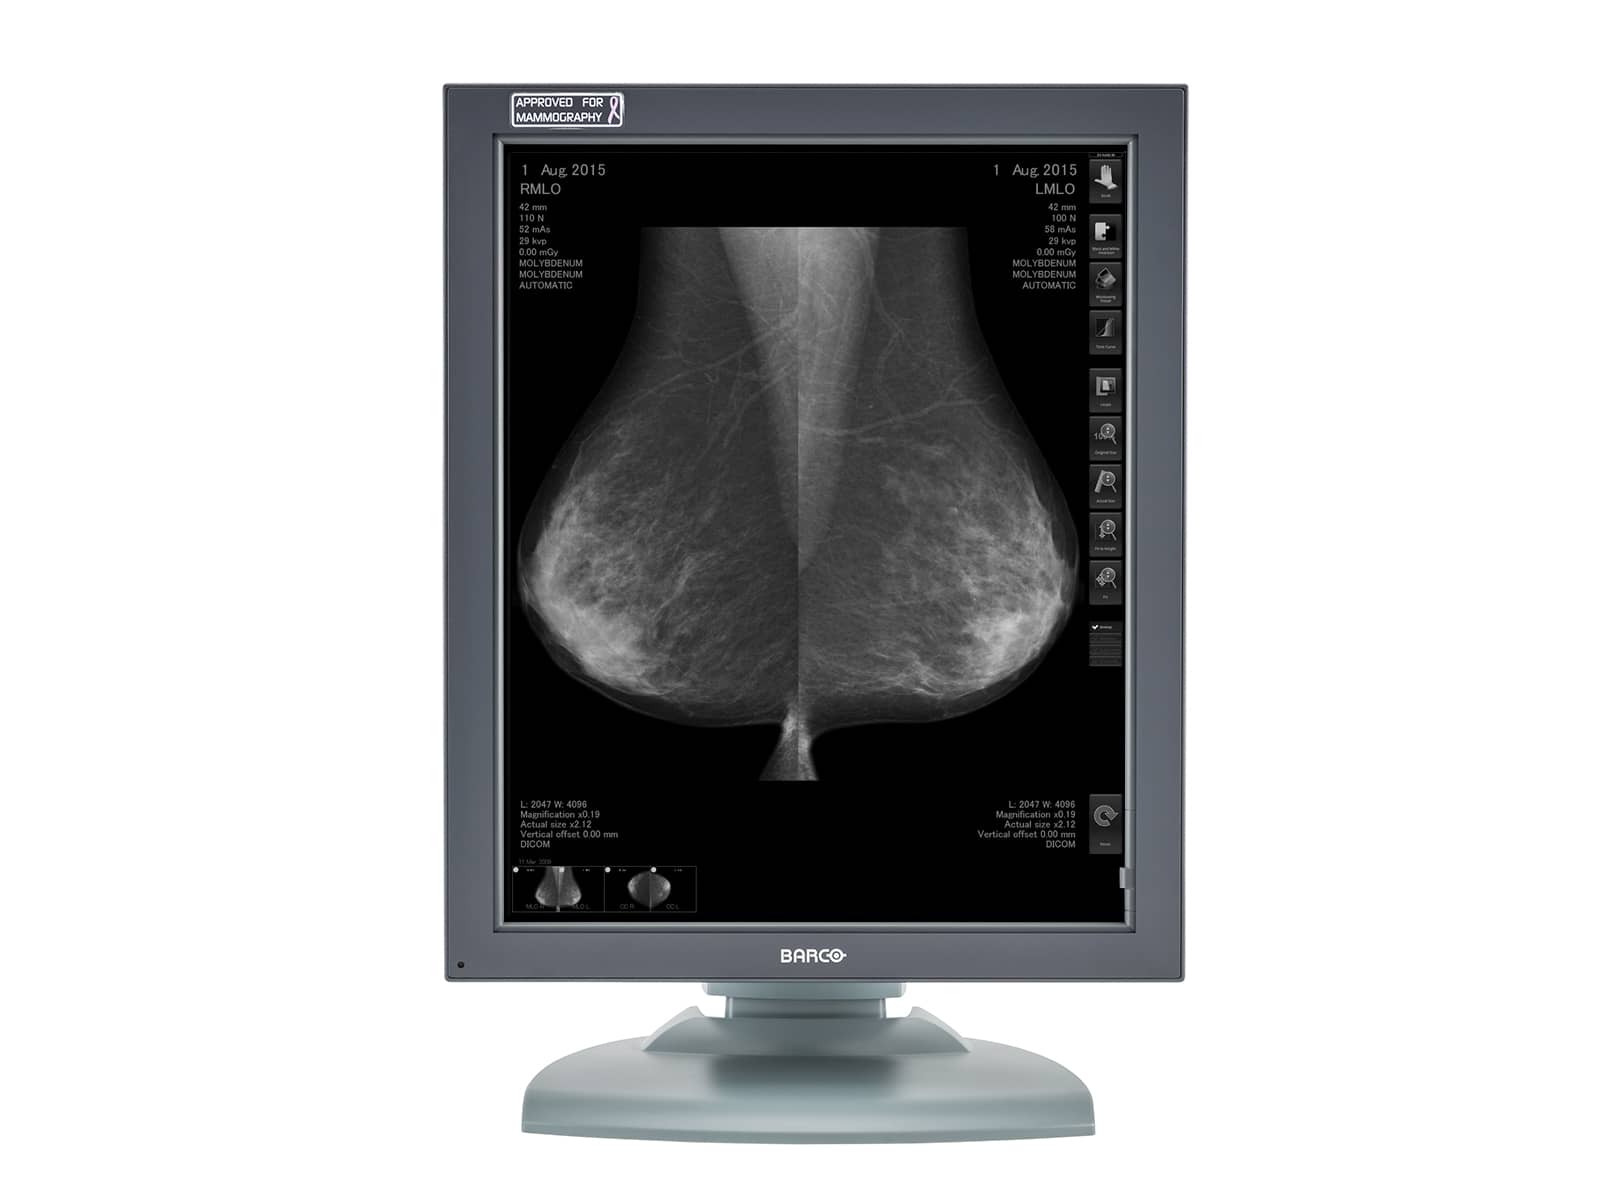 Barco Pantalla de mamografía PACS para imágenes mamarias en escala de grises Coronis MDMG-5121 (K9601259) Monitors.com